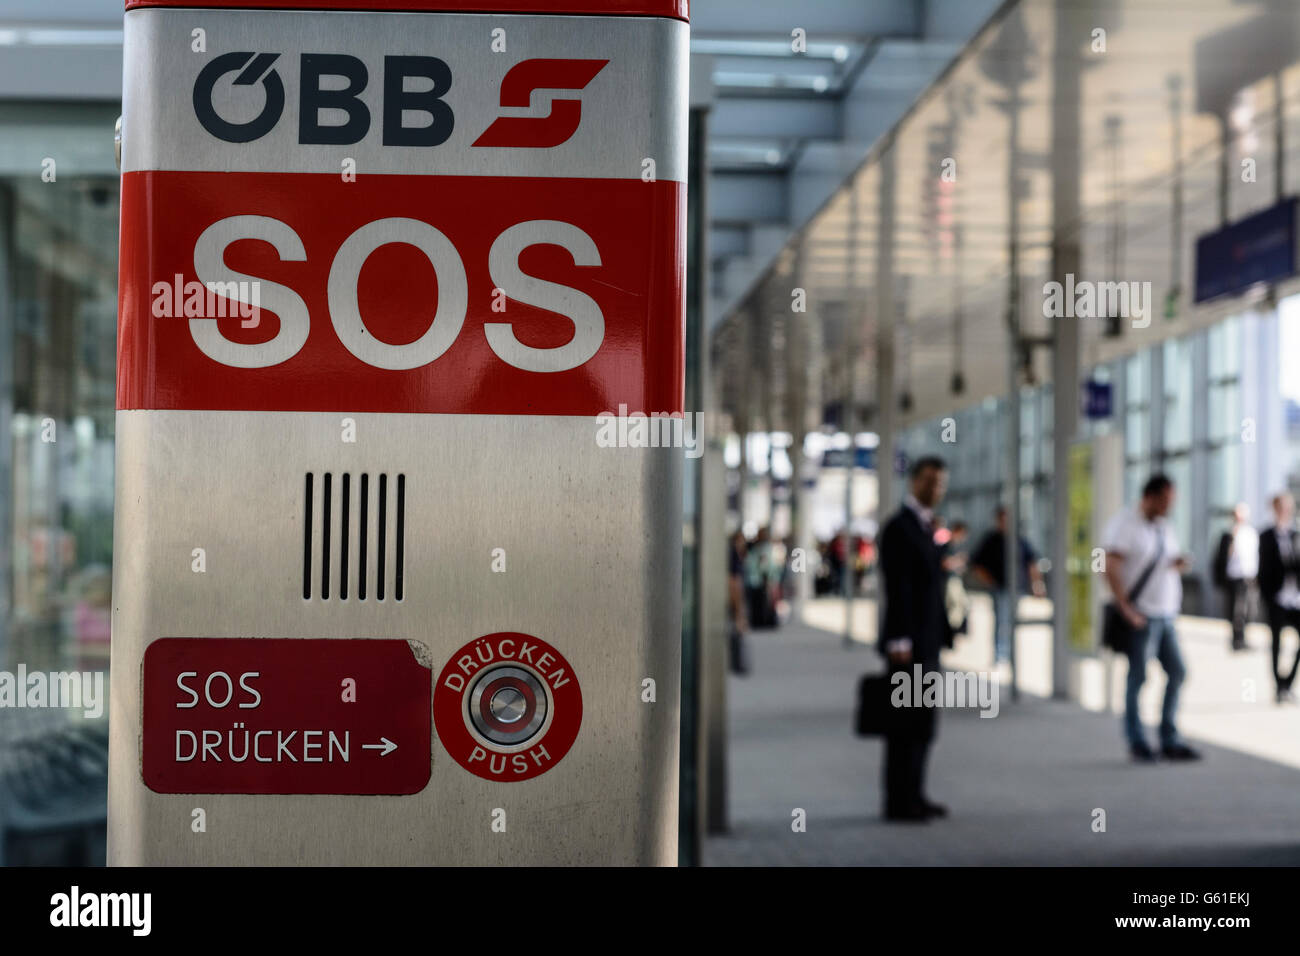 SOS telephone station Wien Praterstern, Wien, Vienna, Austria, Wien, 02. Stock Photo